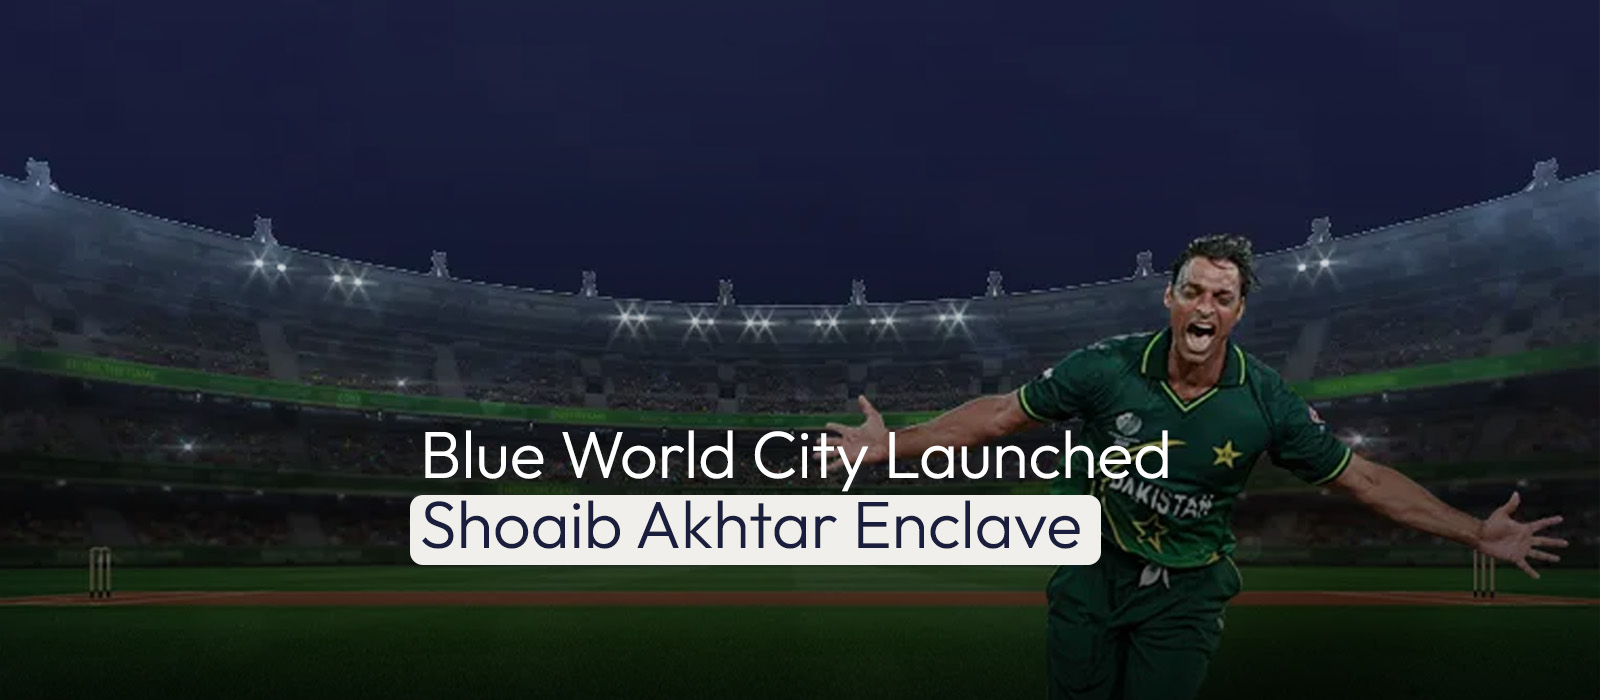 Blue World City Launched Shoaib Akhtar Enclave